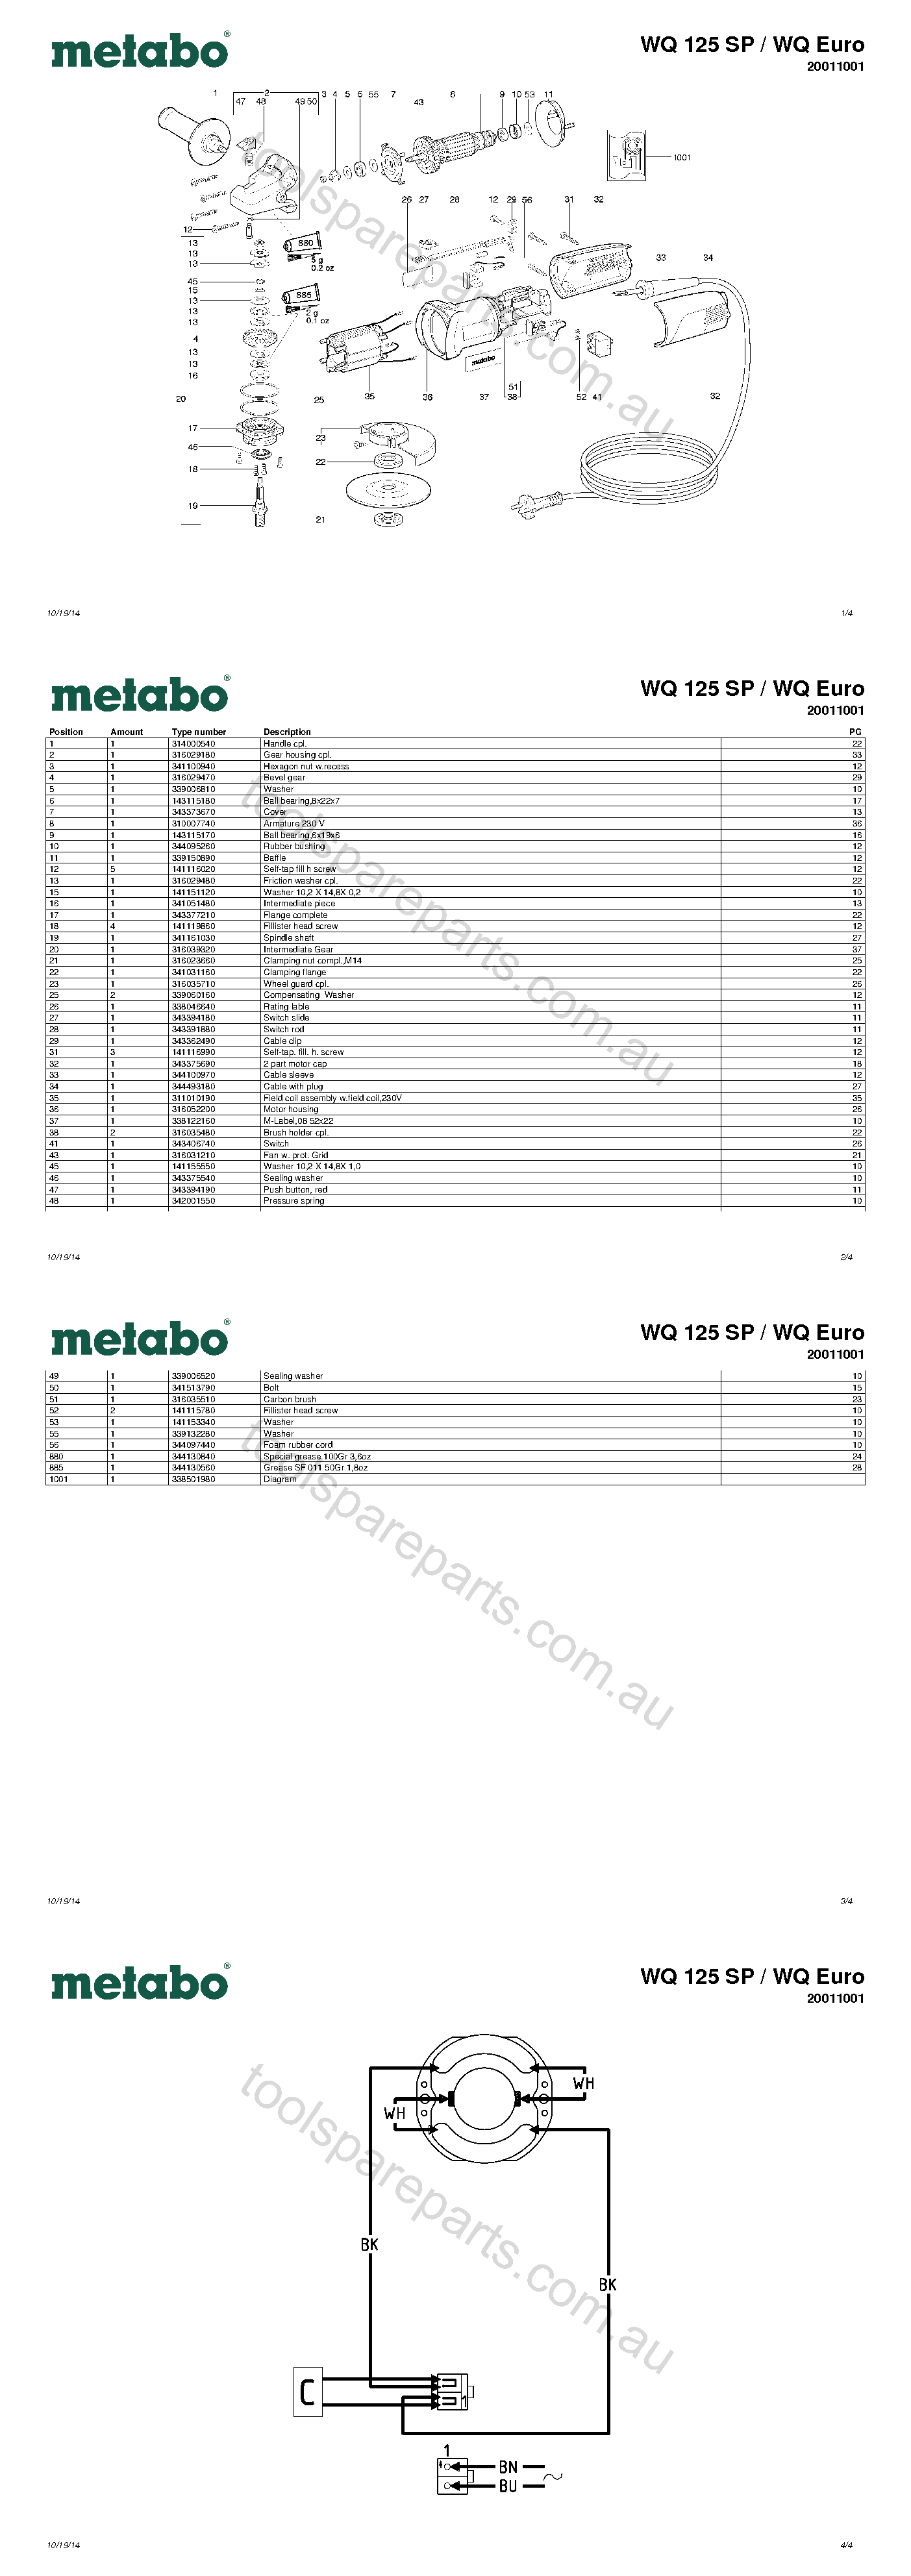 Metabo WQ 125 SP / WQ Euro 20011001  Diagram 1